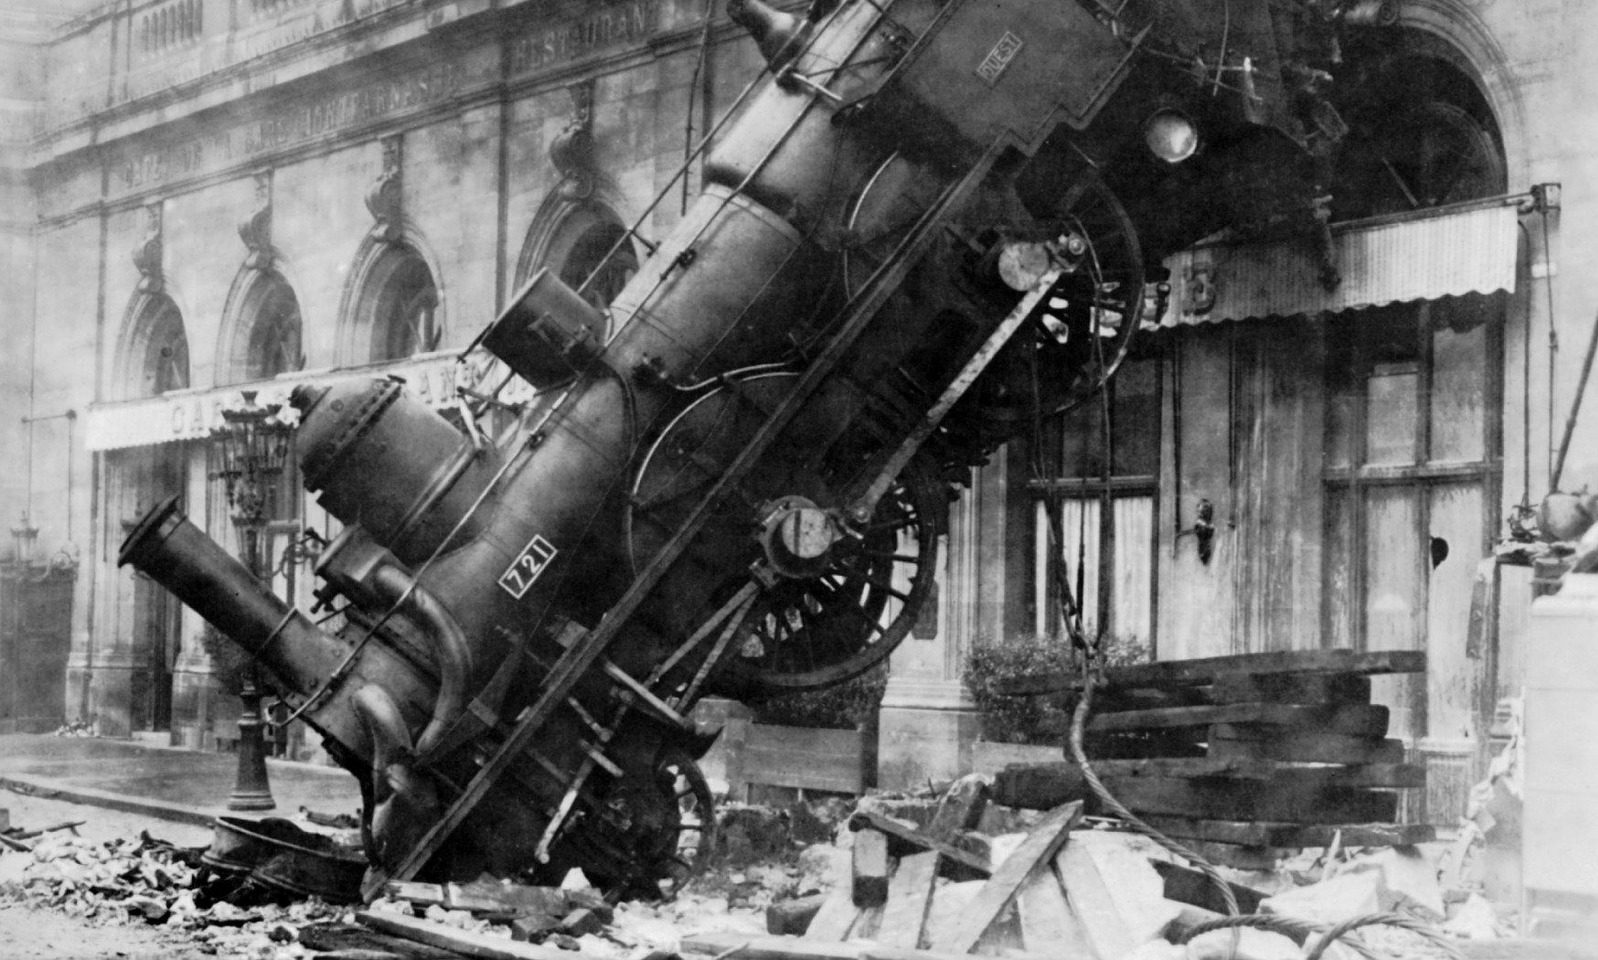 Photography Monochrome Steam Locomotive Wreck Accidents Old Photos Street Building Paris France Disa 1598x960